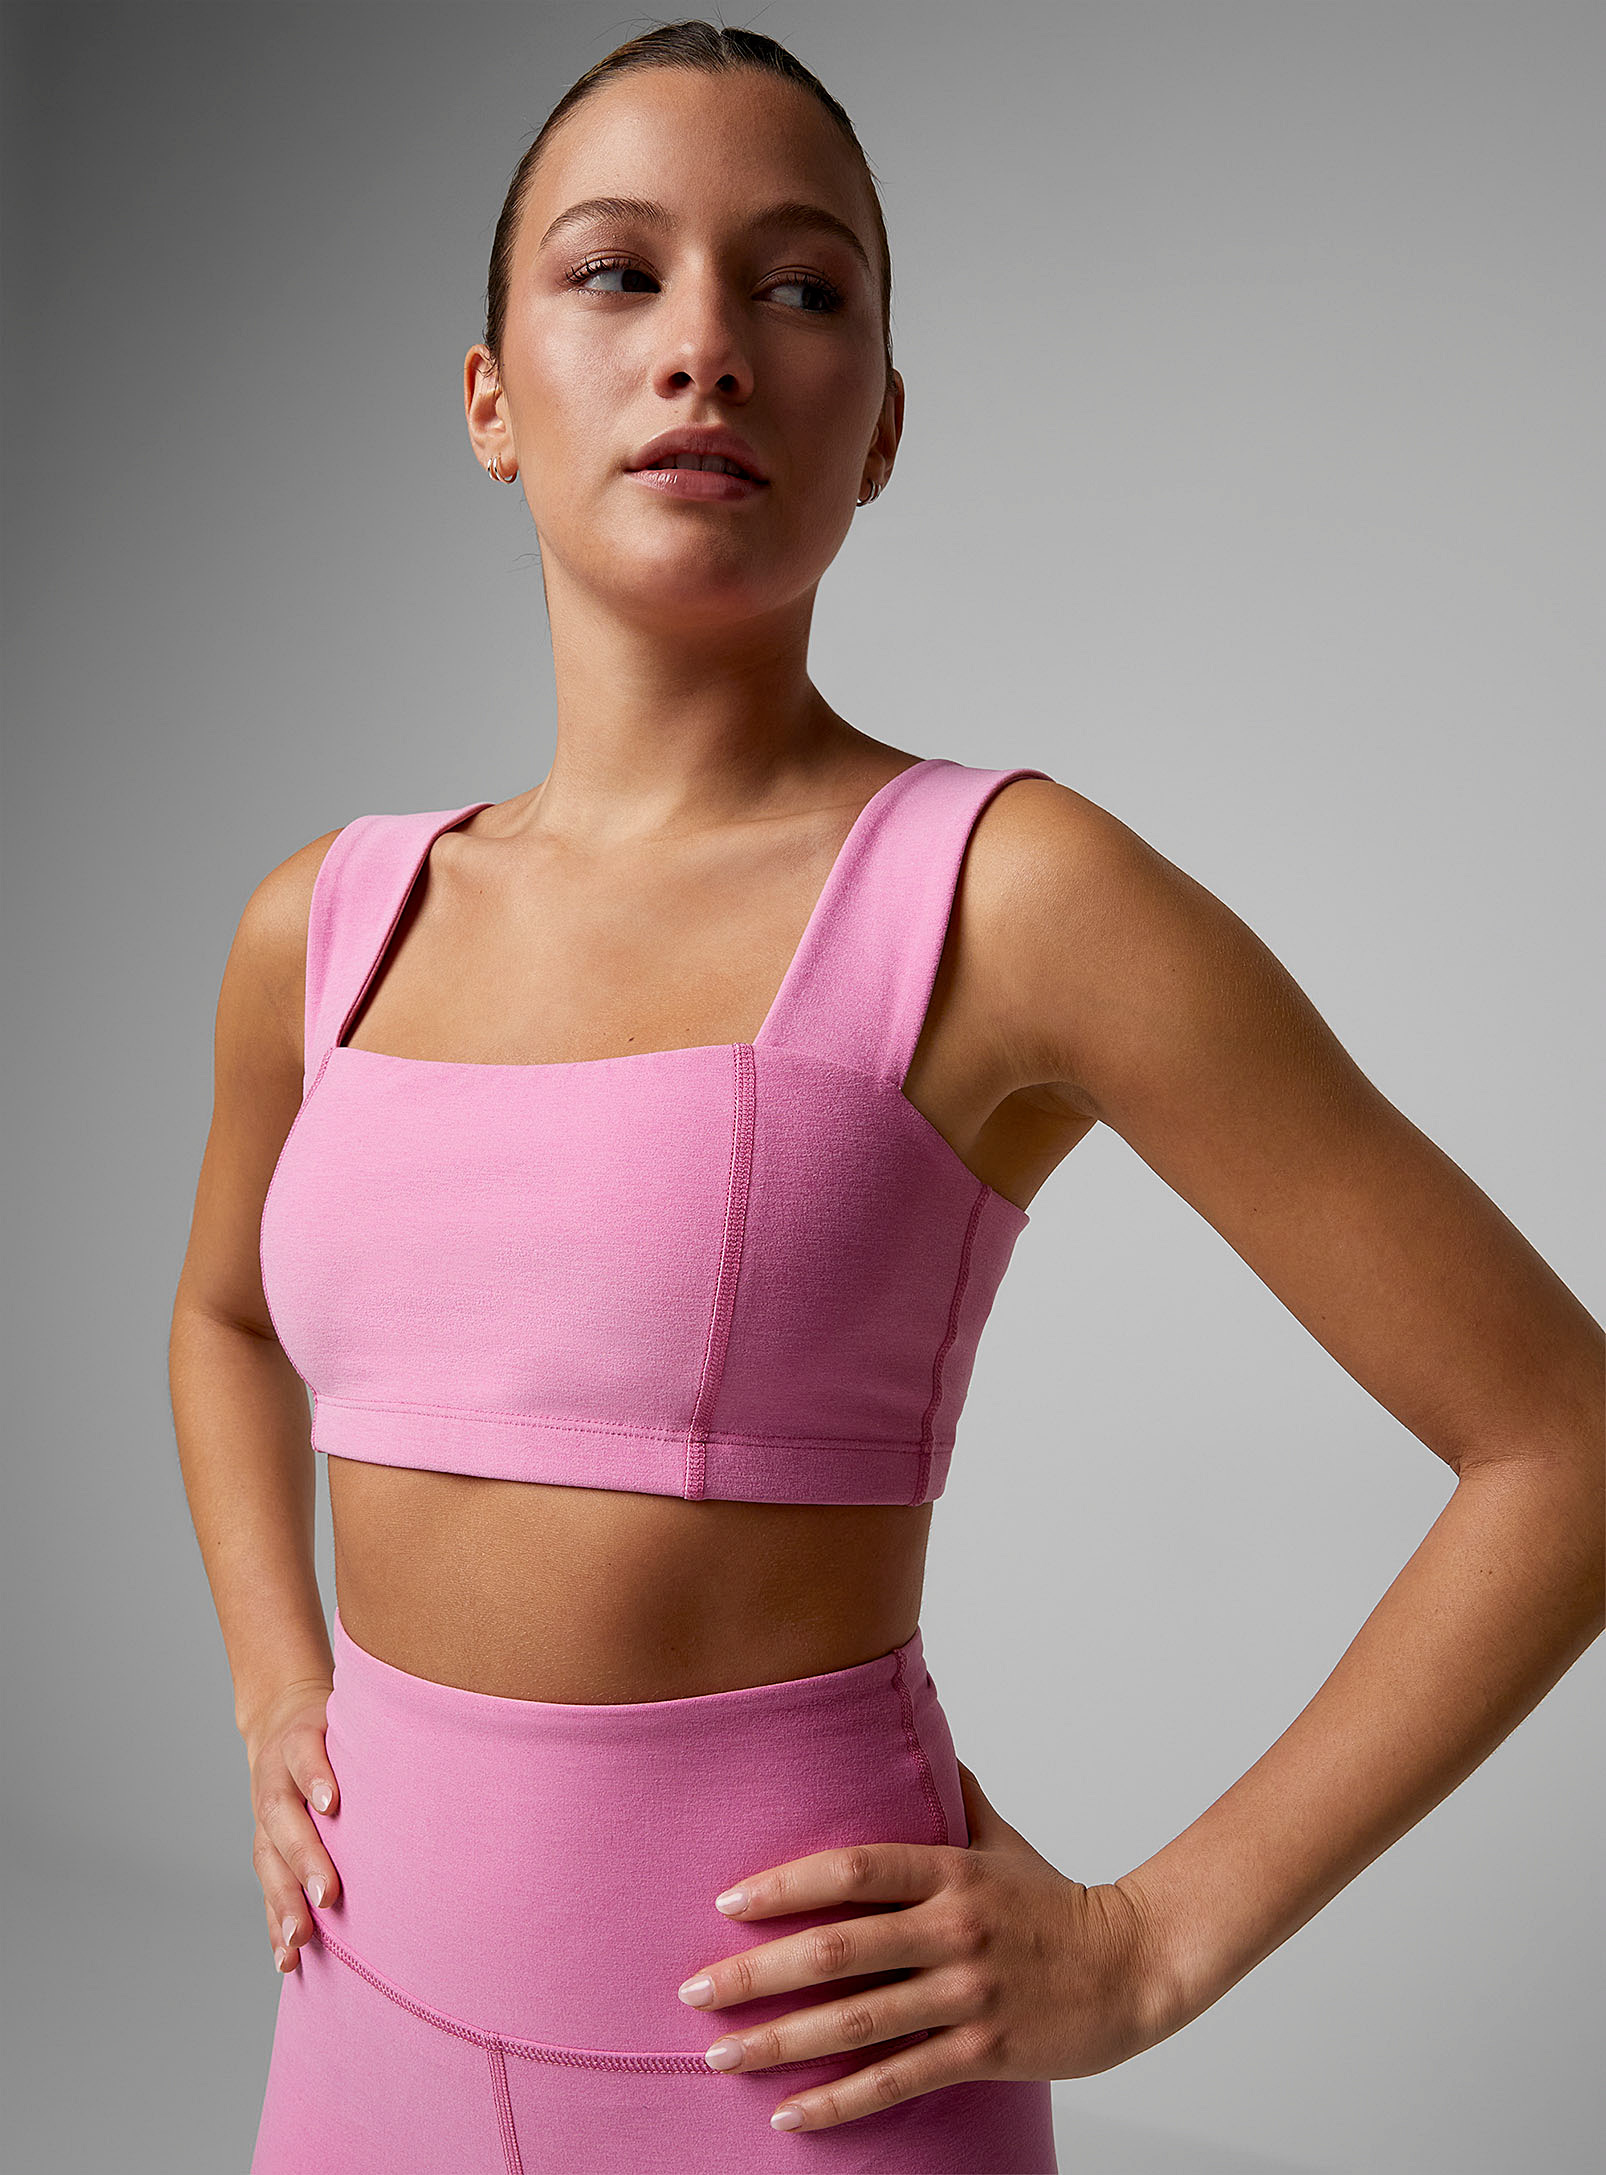 Beyond Yoga - Women's Candy-pink square-neck bra